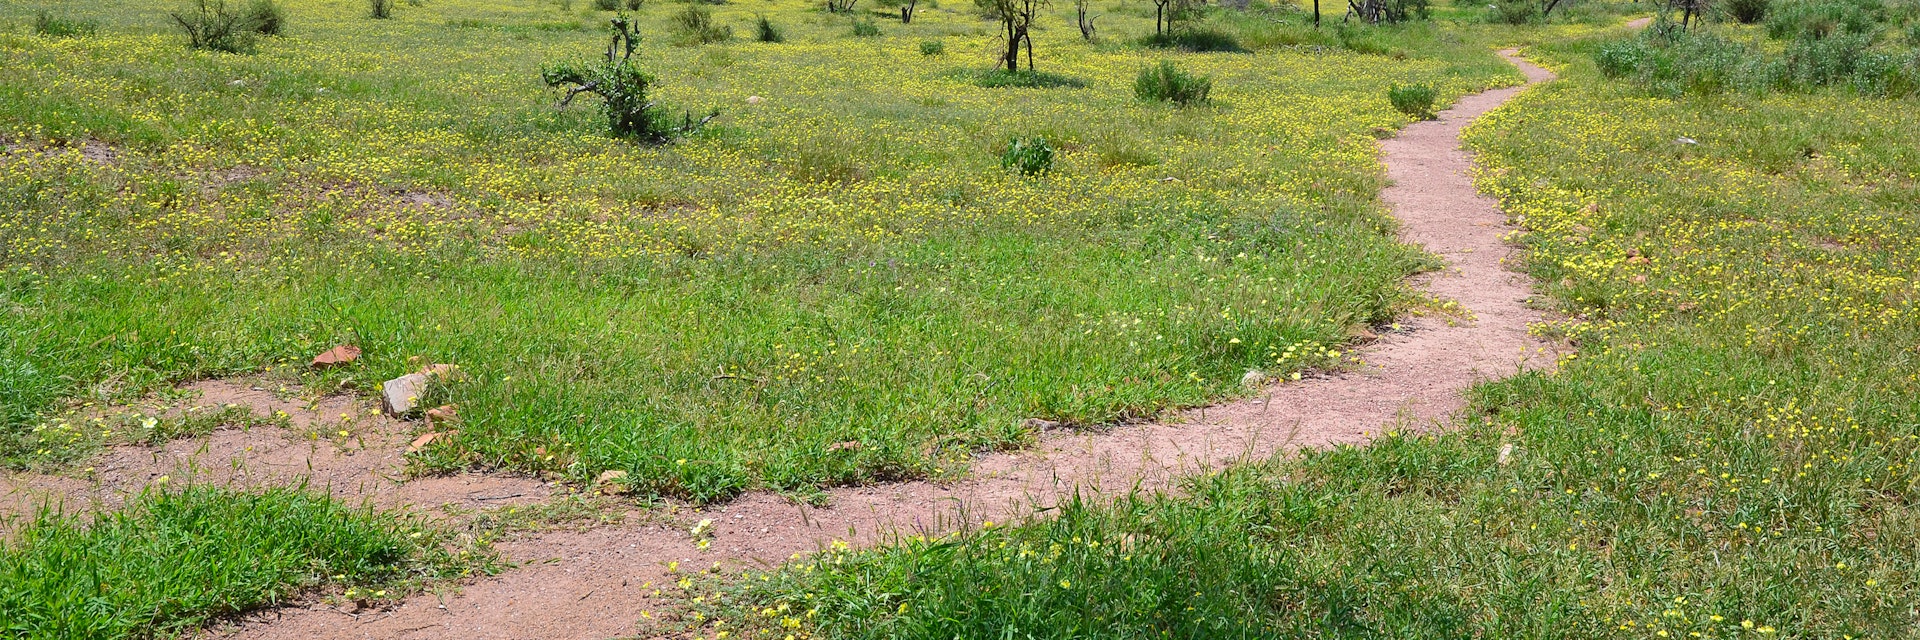 Landscape in Mapungubwe National Park, South Africa.